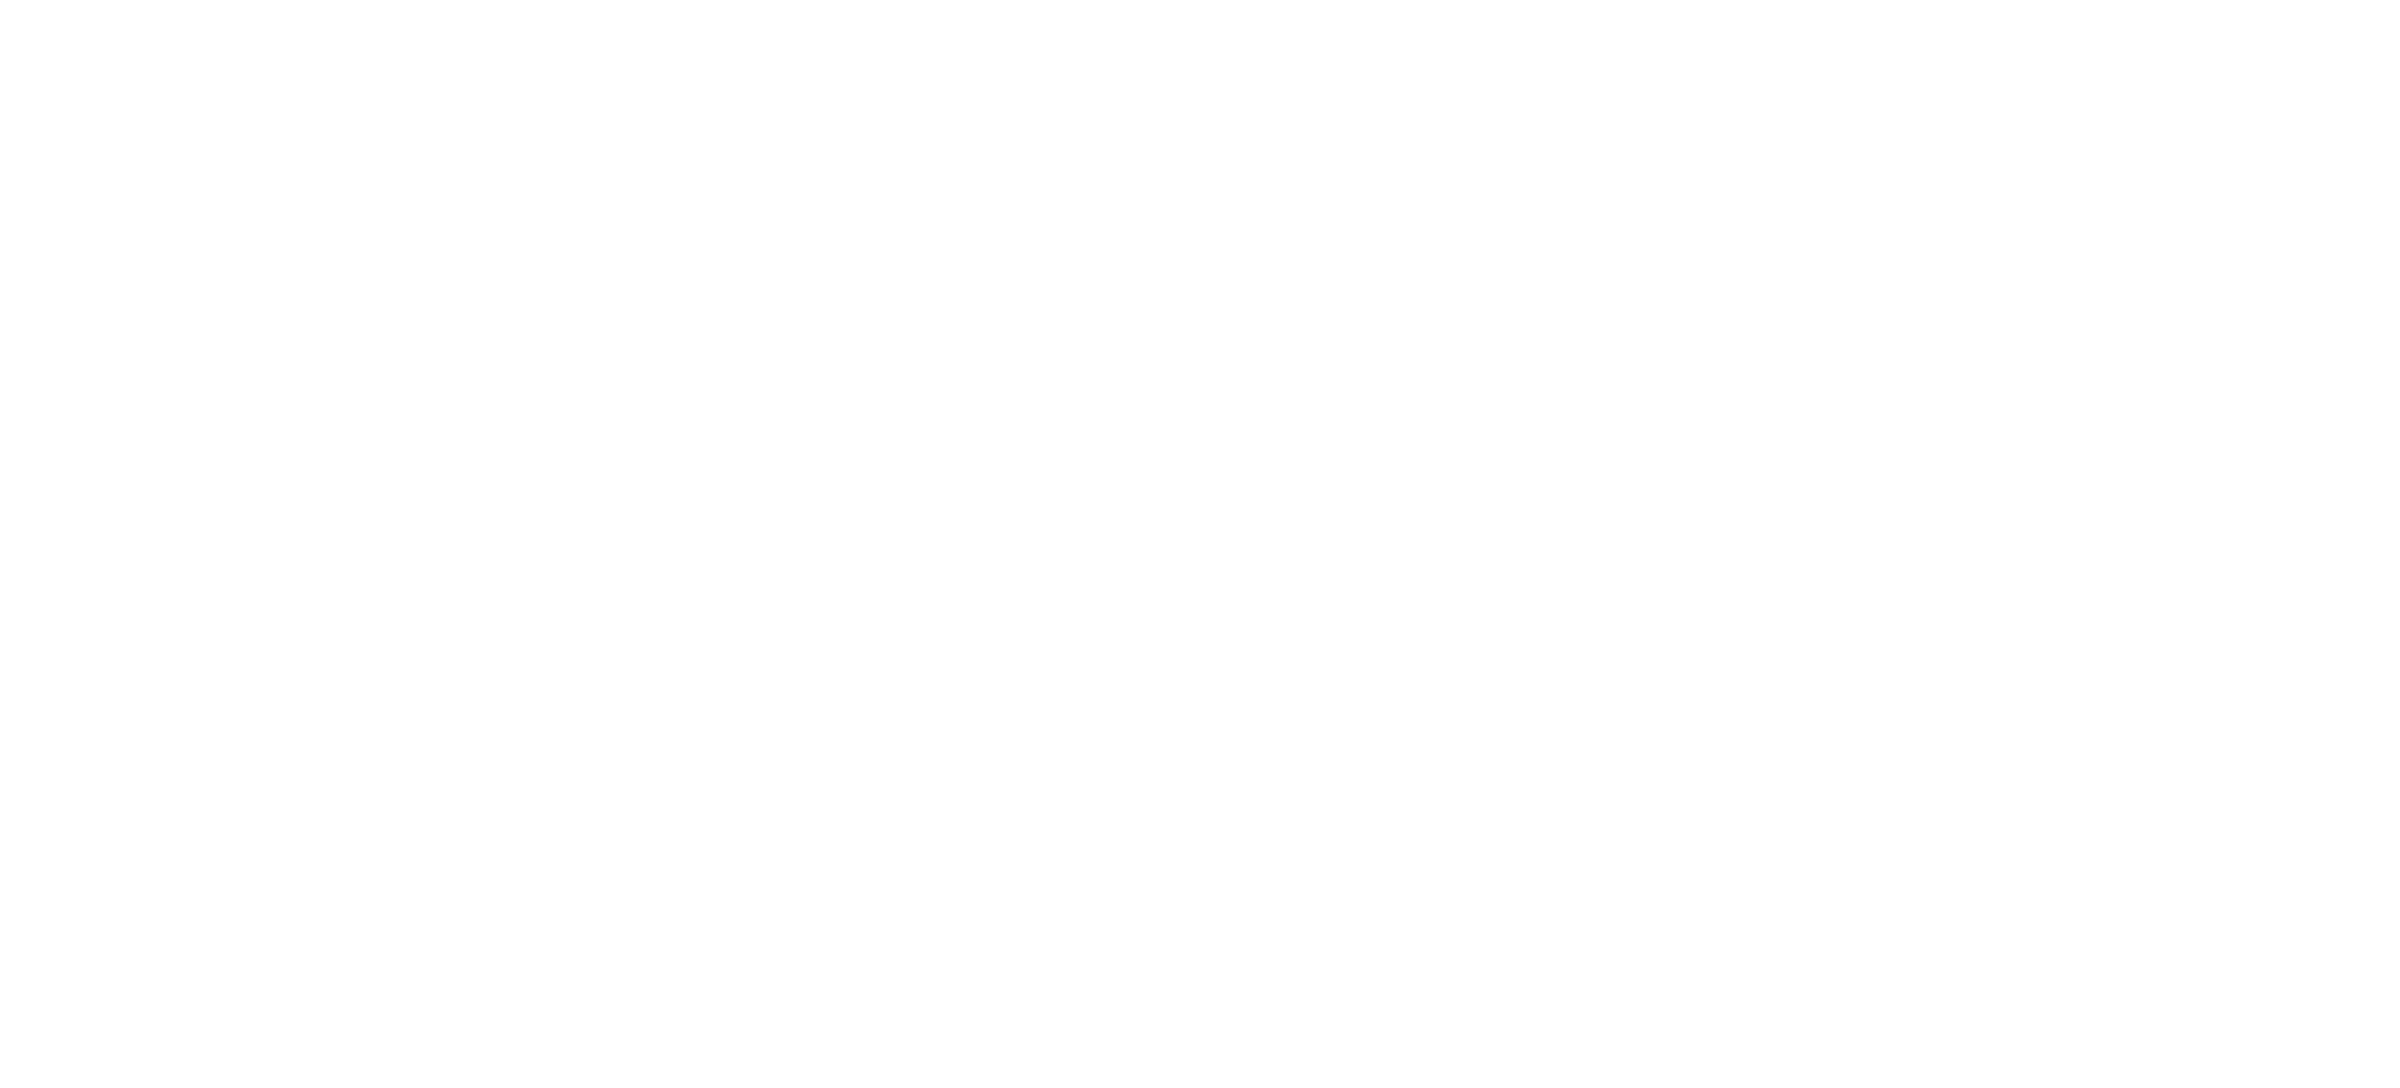 The Bradford TBAL logo